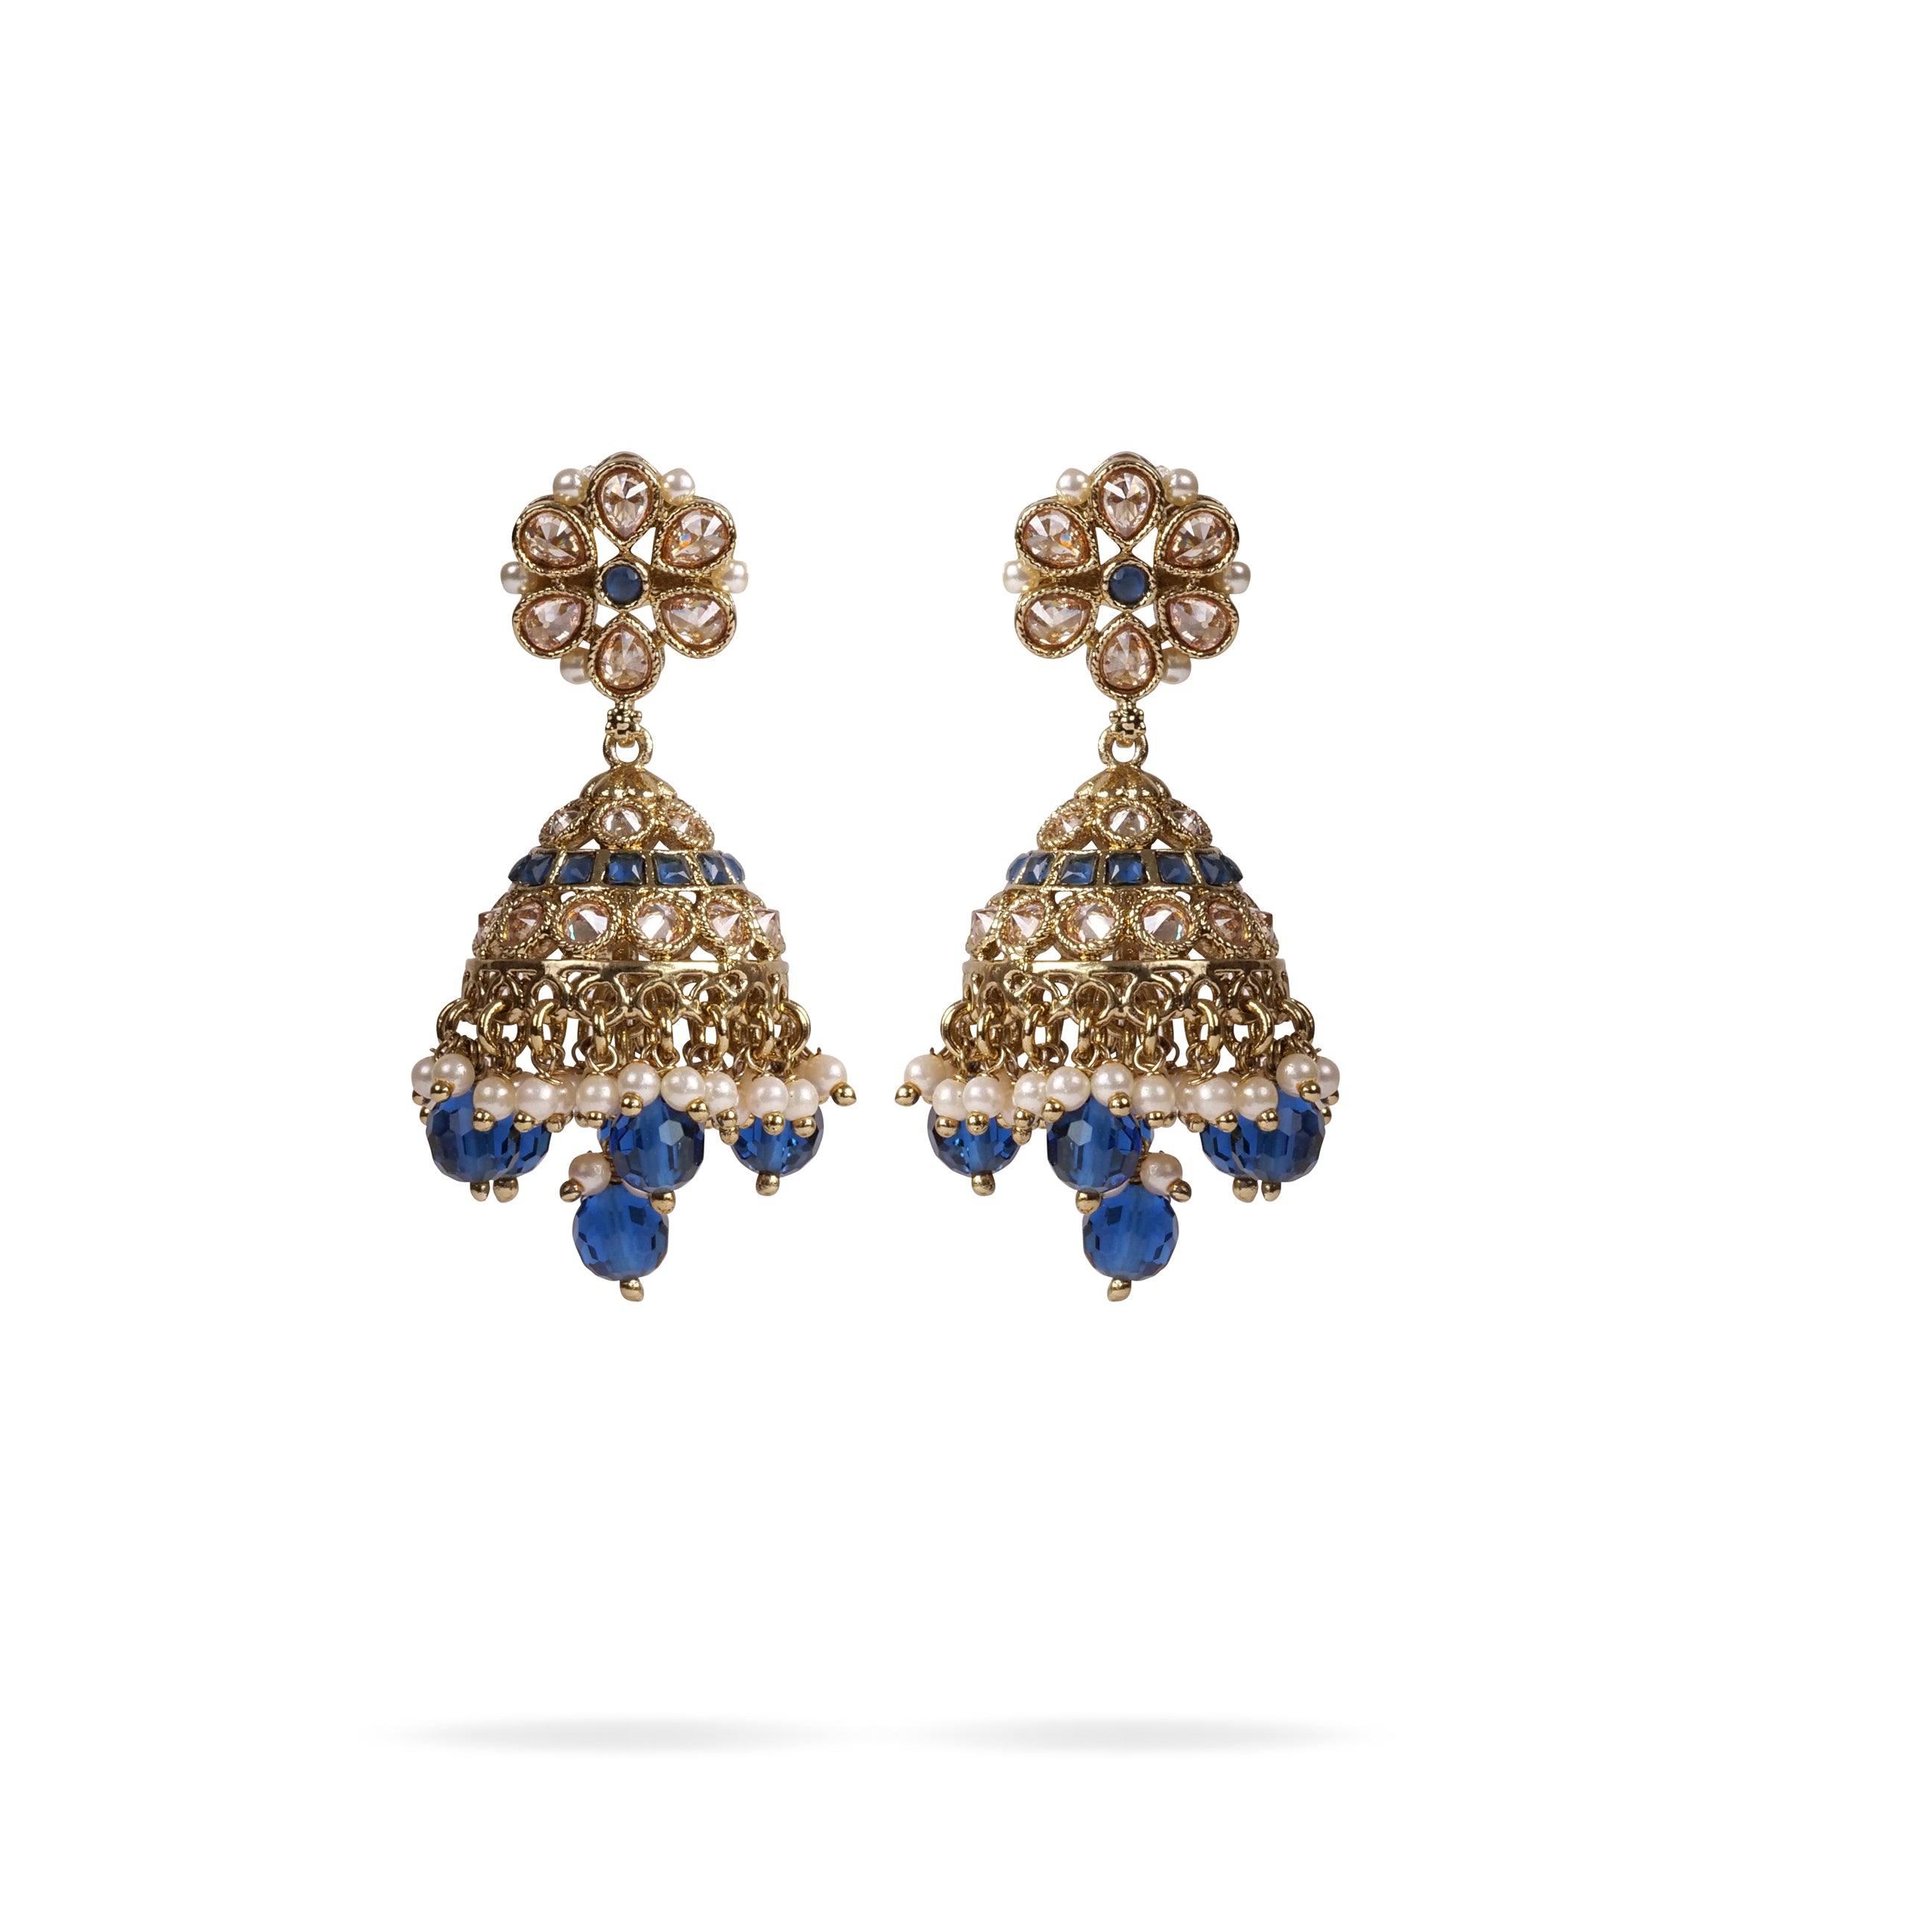 New Design Indian Pakistani Bahubali Jhumkay, Earrings, Jhumka, Jewellery UK  | eBay